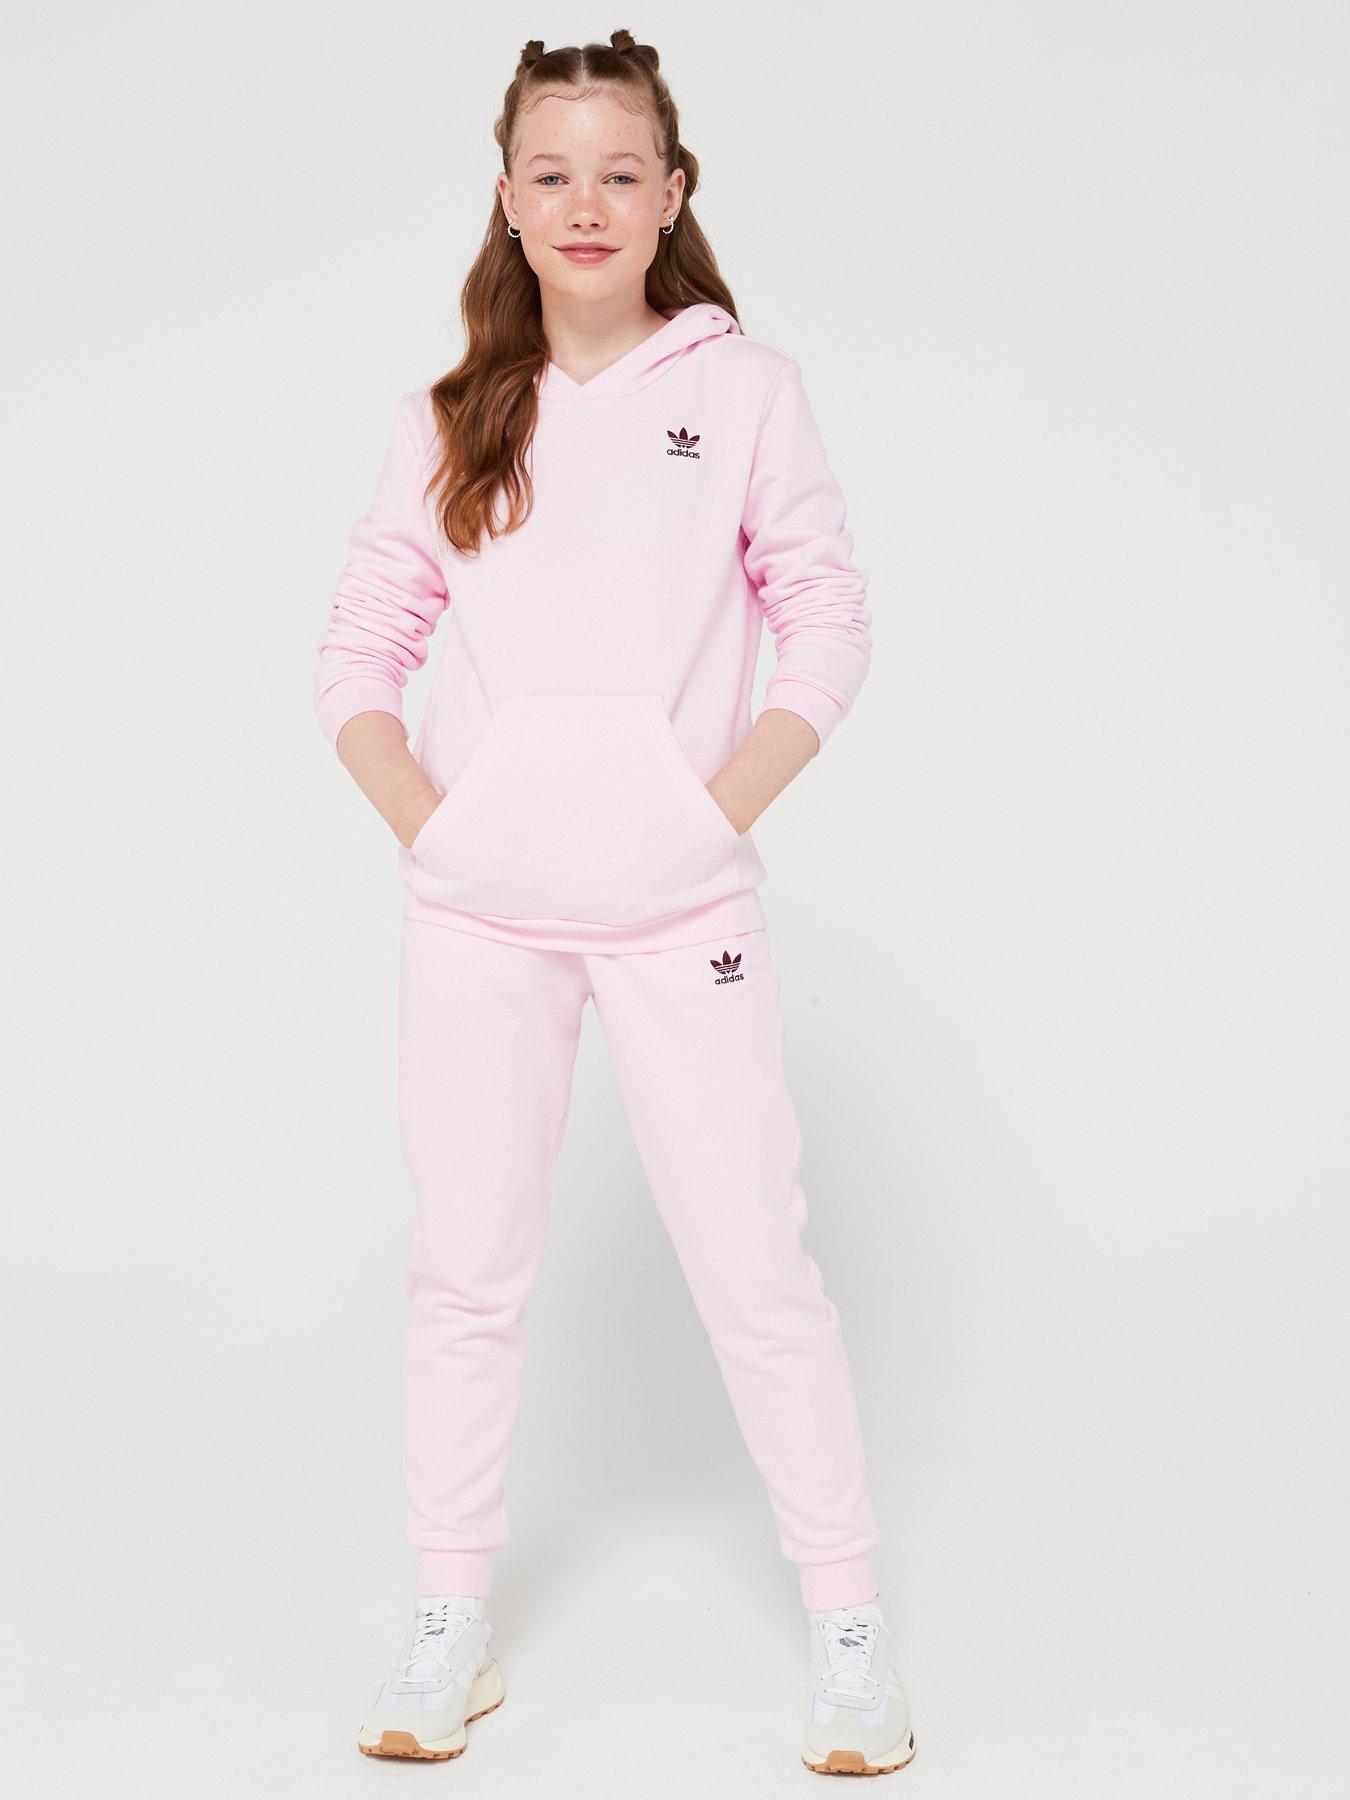 Hoodies Pink | | | & Child & Sportswear | Adidas | Ireland sweatshirts baby Very